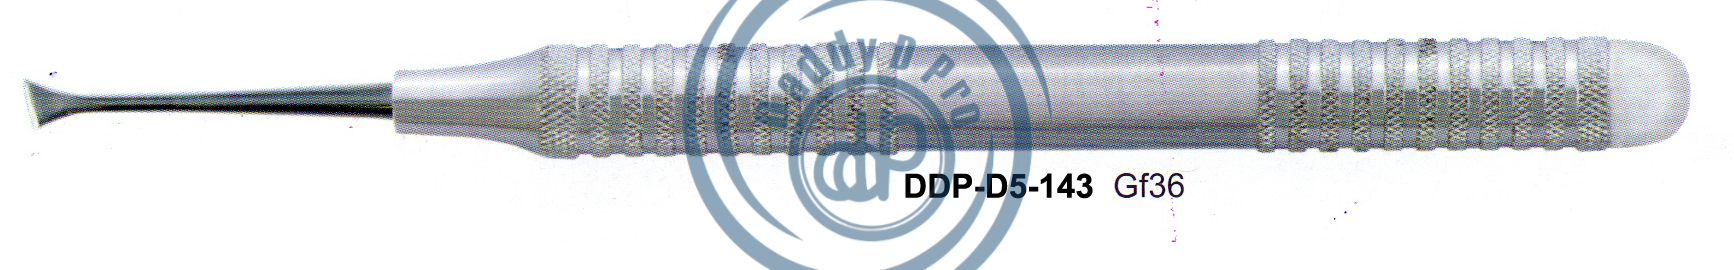 images/DDP-D5-143.png